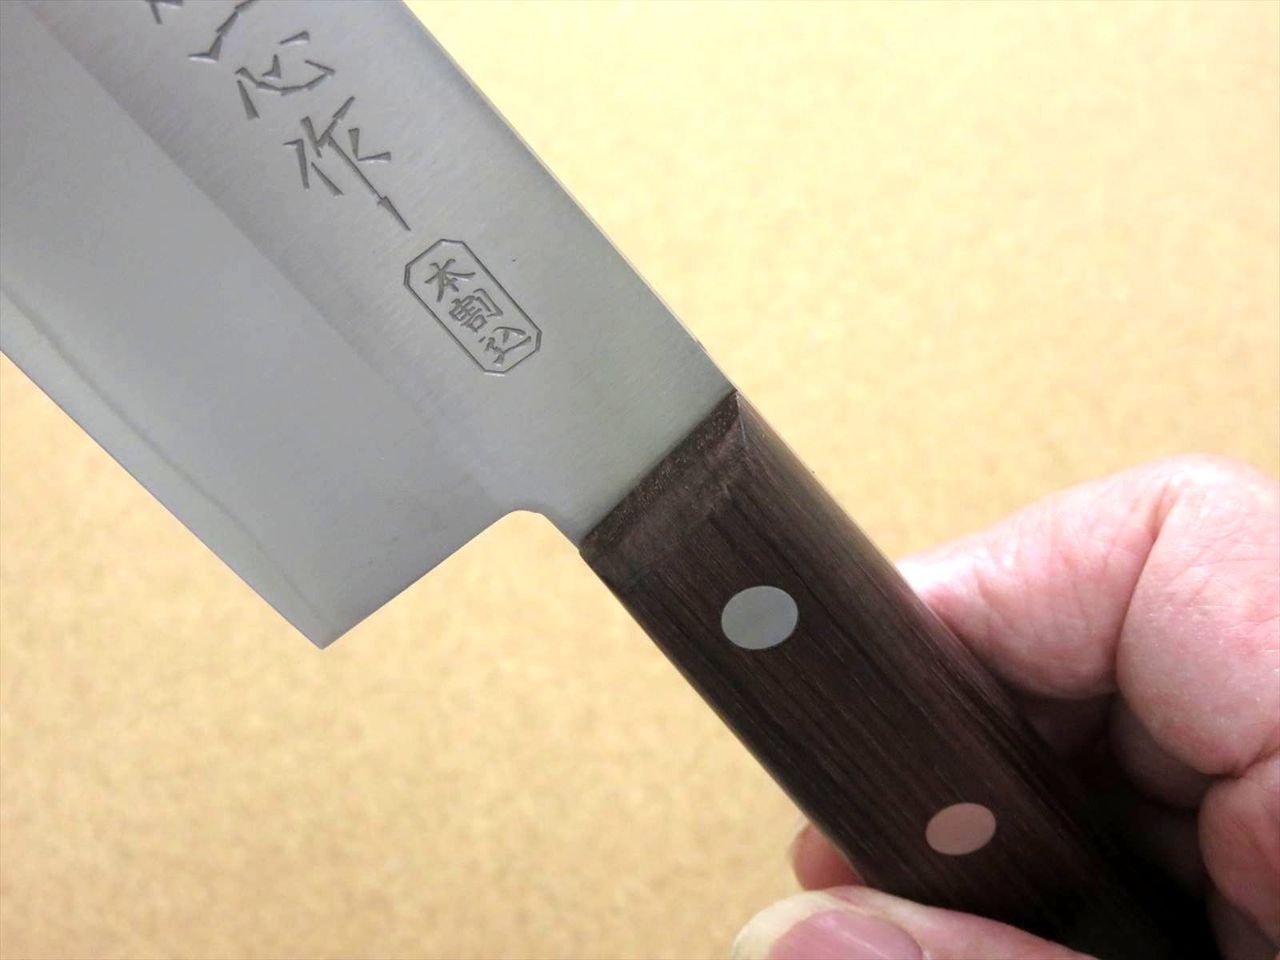 Japanese Miyabi Isshin Kitchen Gyuto Chef's Knife 8.3 inch 3 Layers SEKI JAPAN